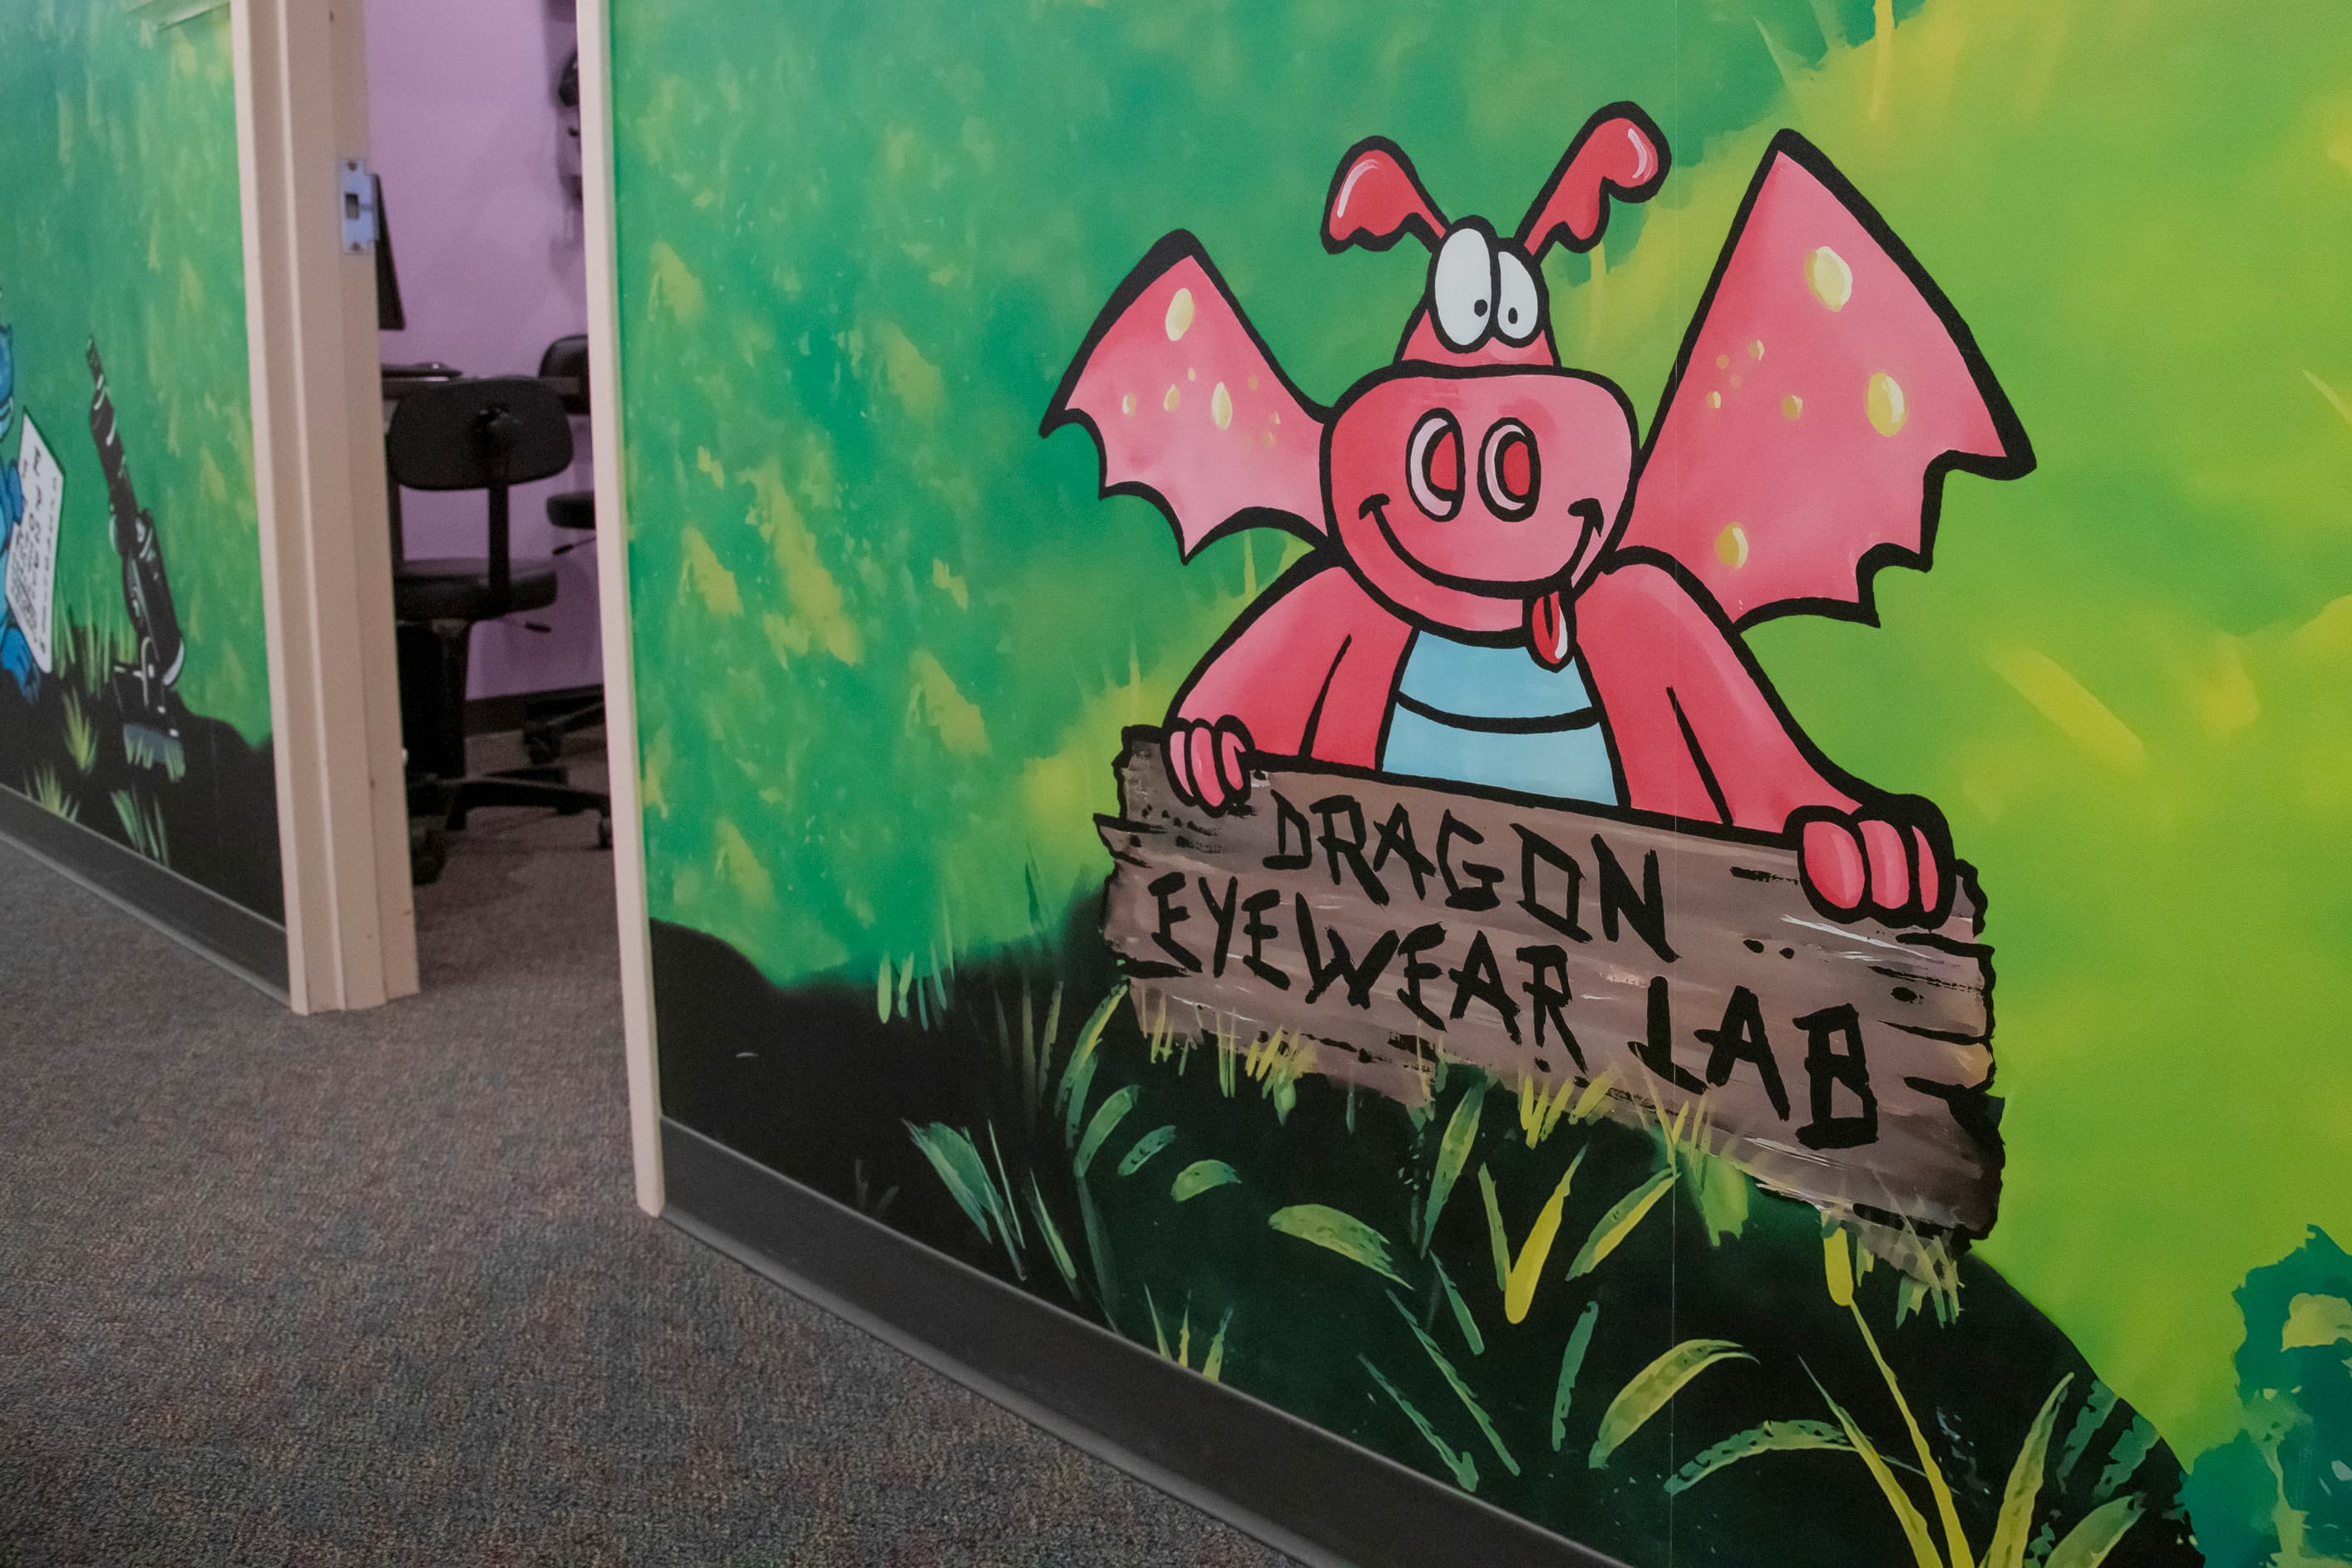 pink cartoon dragon holding a sign that says dragon eyewear lab